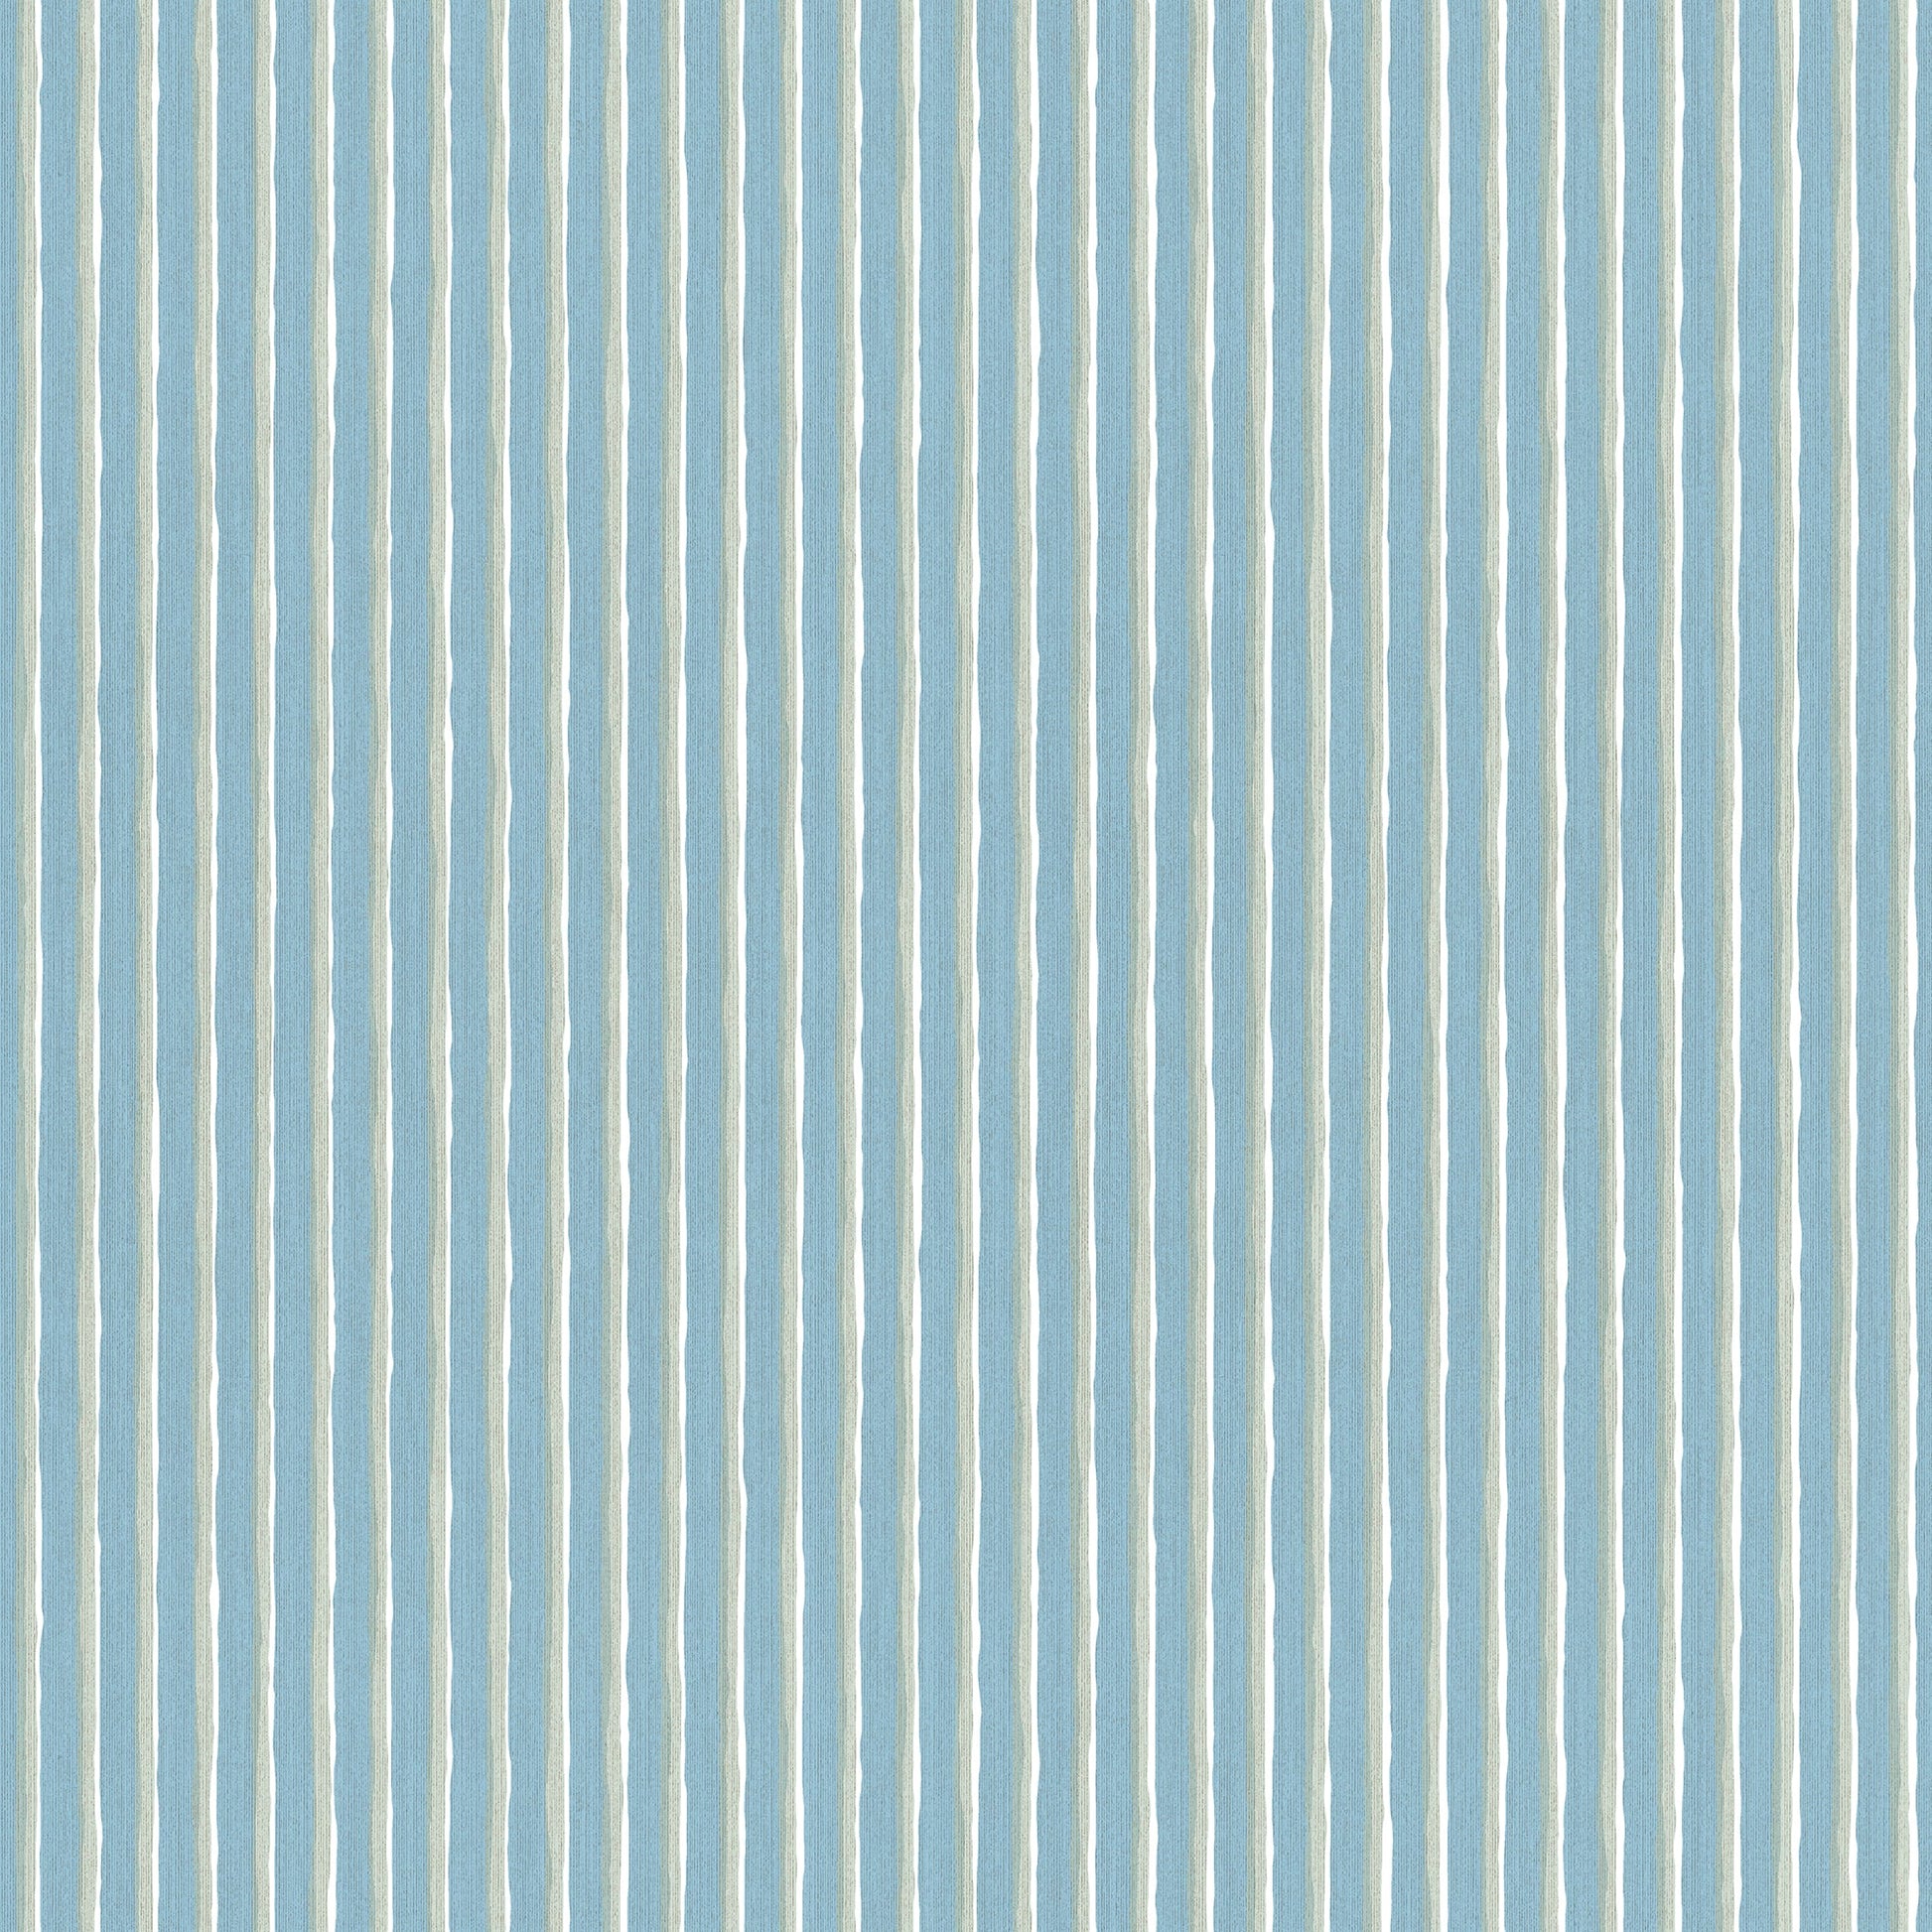 S10143 Brita sky blue, Huset i Solen by Sandberg Wallpaper